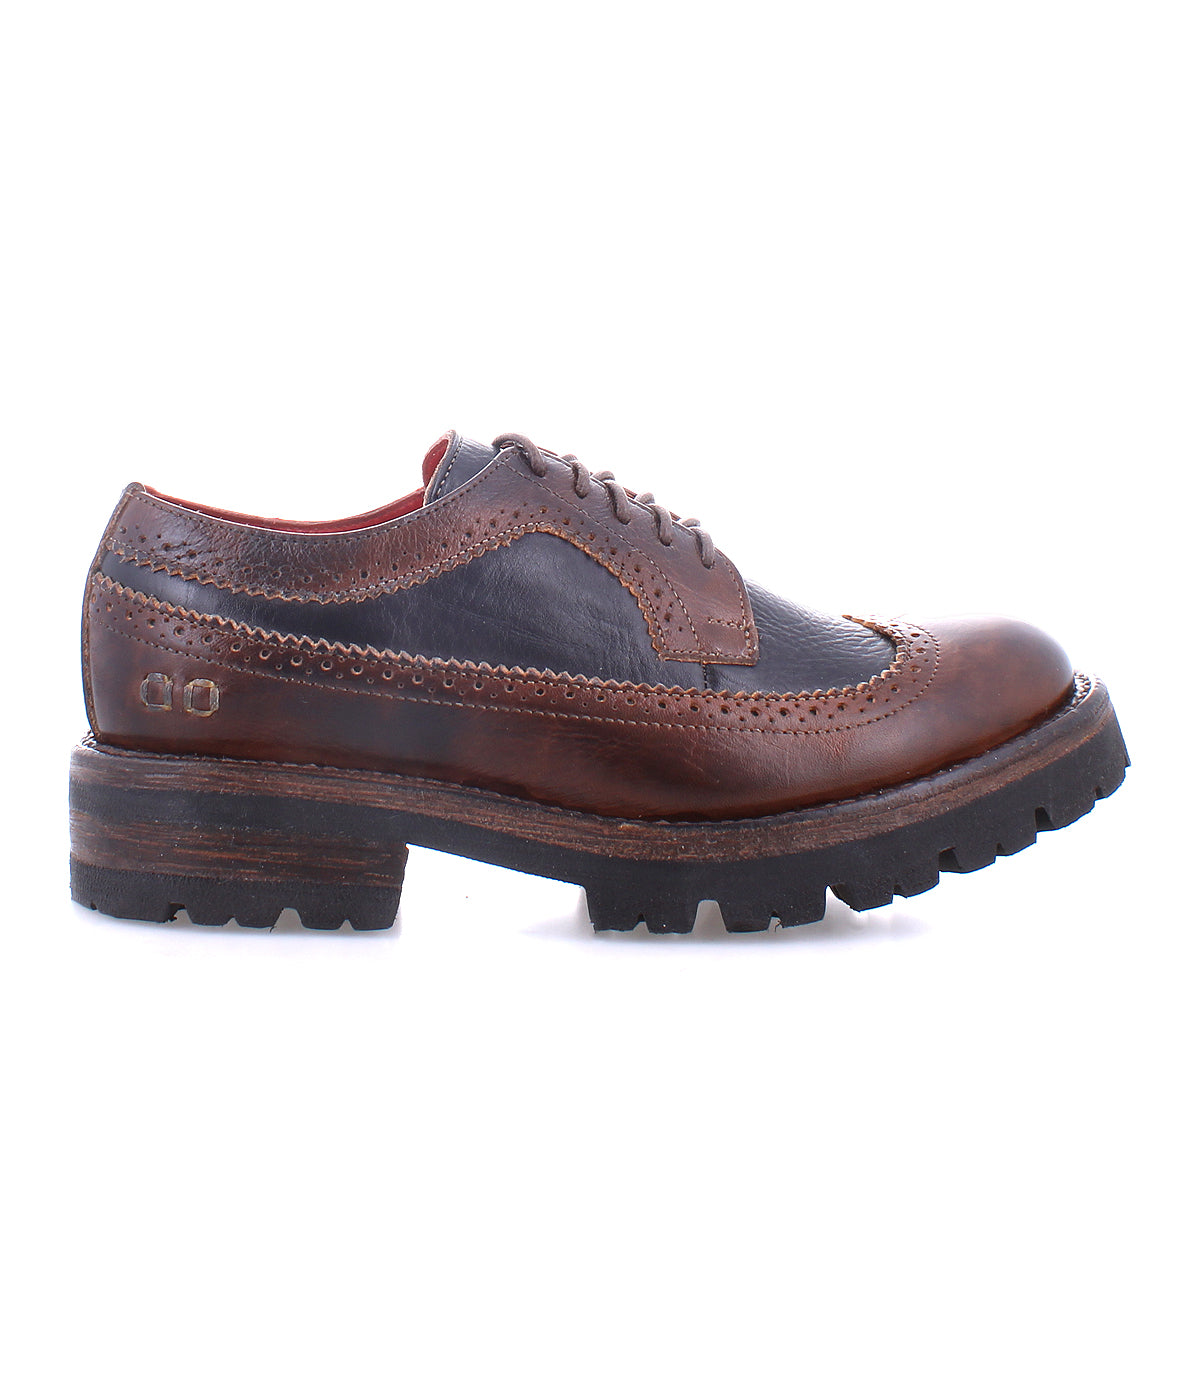 A retro chic men's brown wingtip Oxford shoe, the Bed Stu Lita K III.